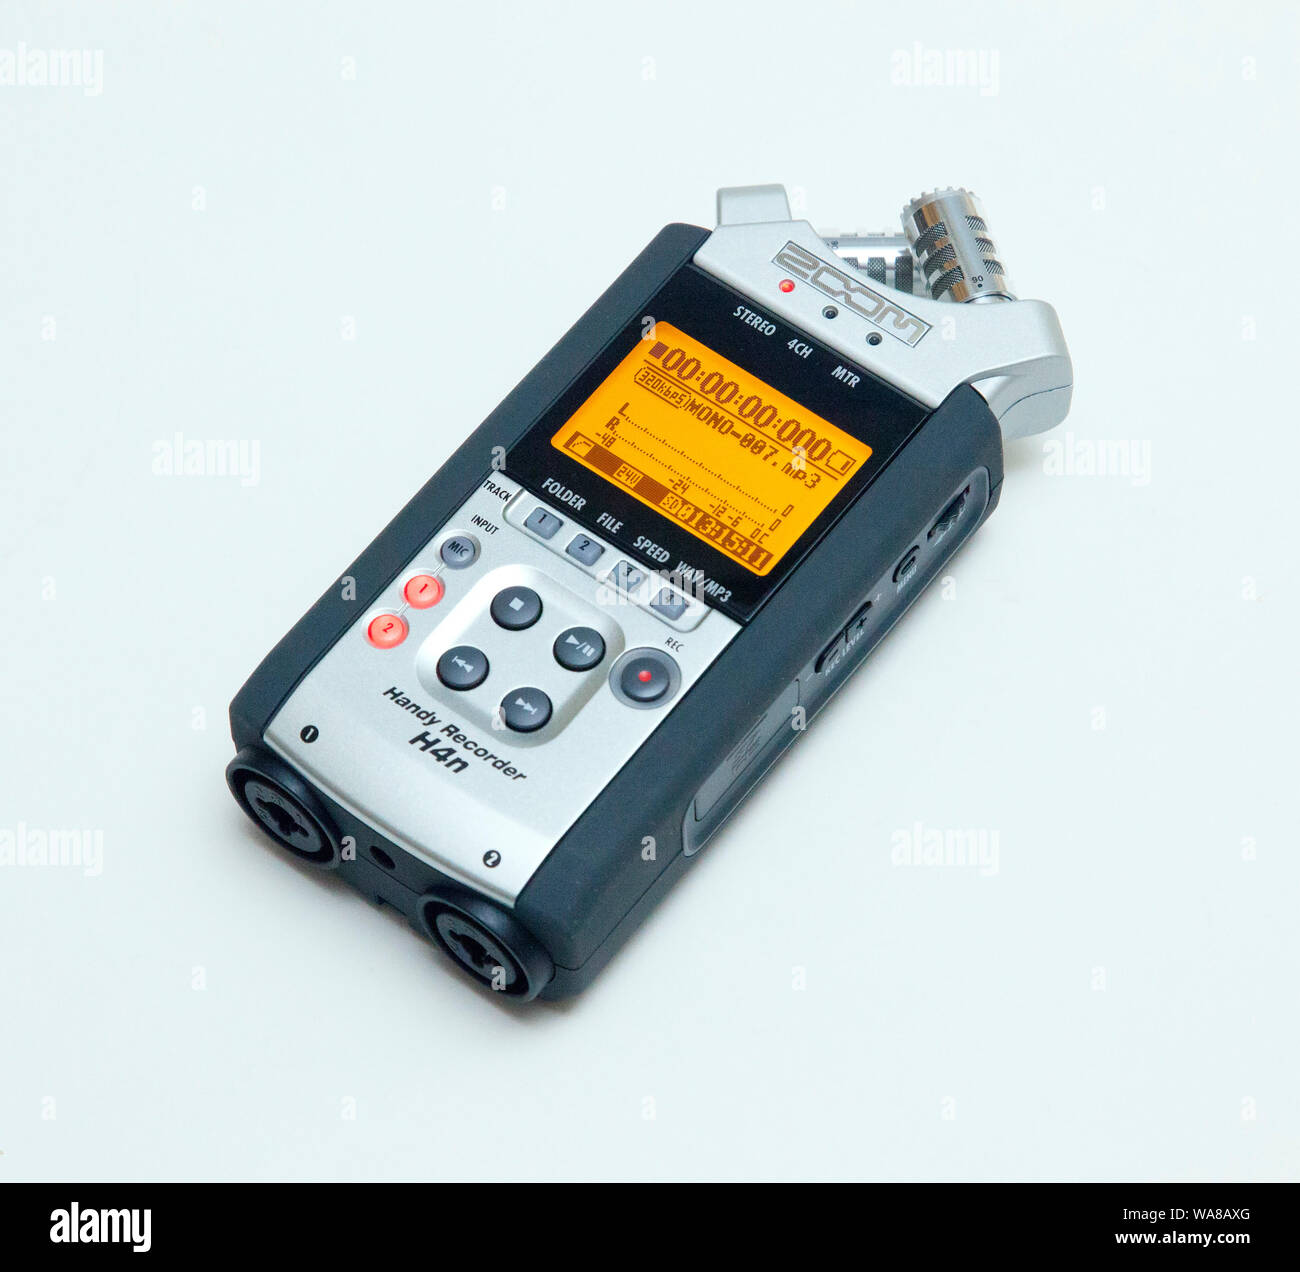 Zoom H4n digital sound recorder Stock Photo